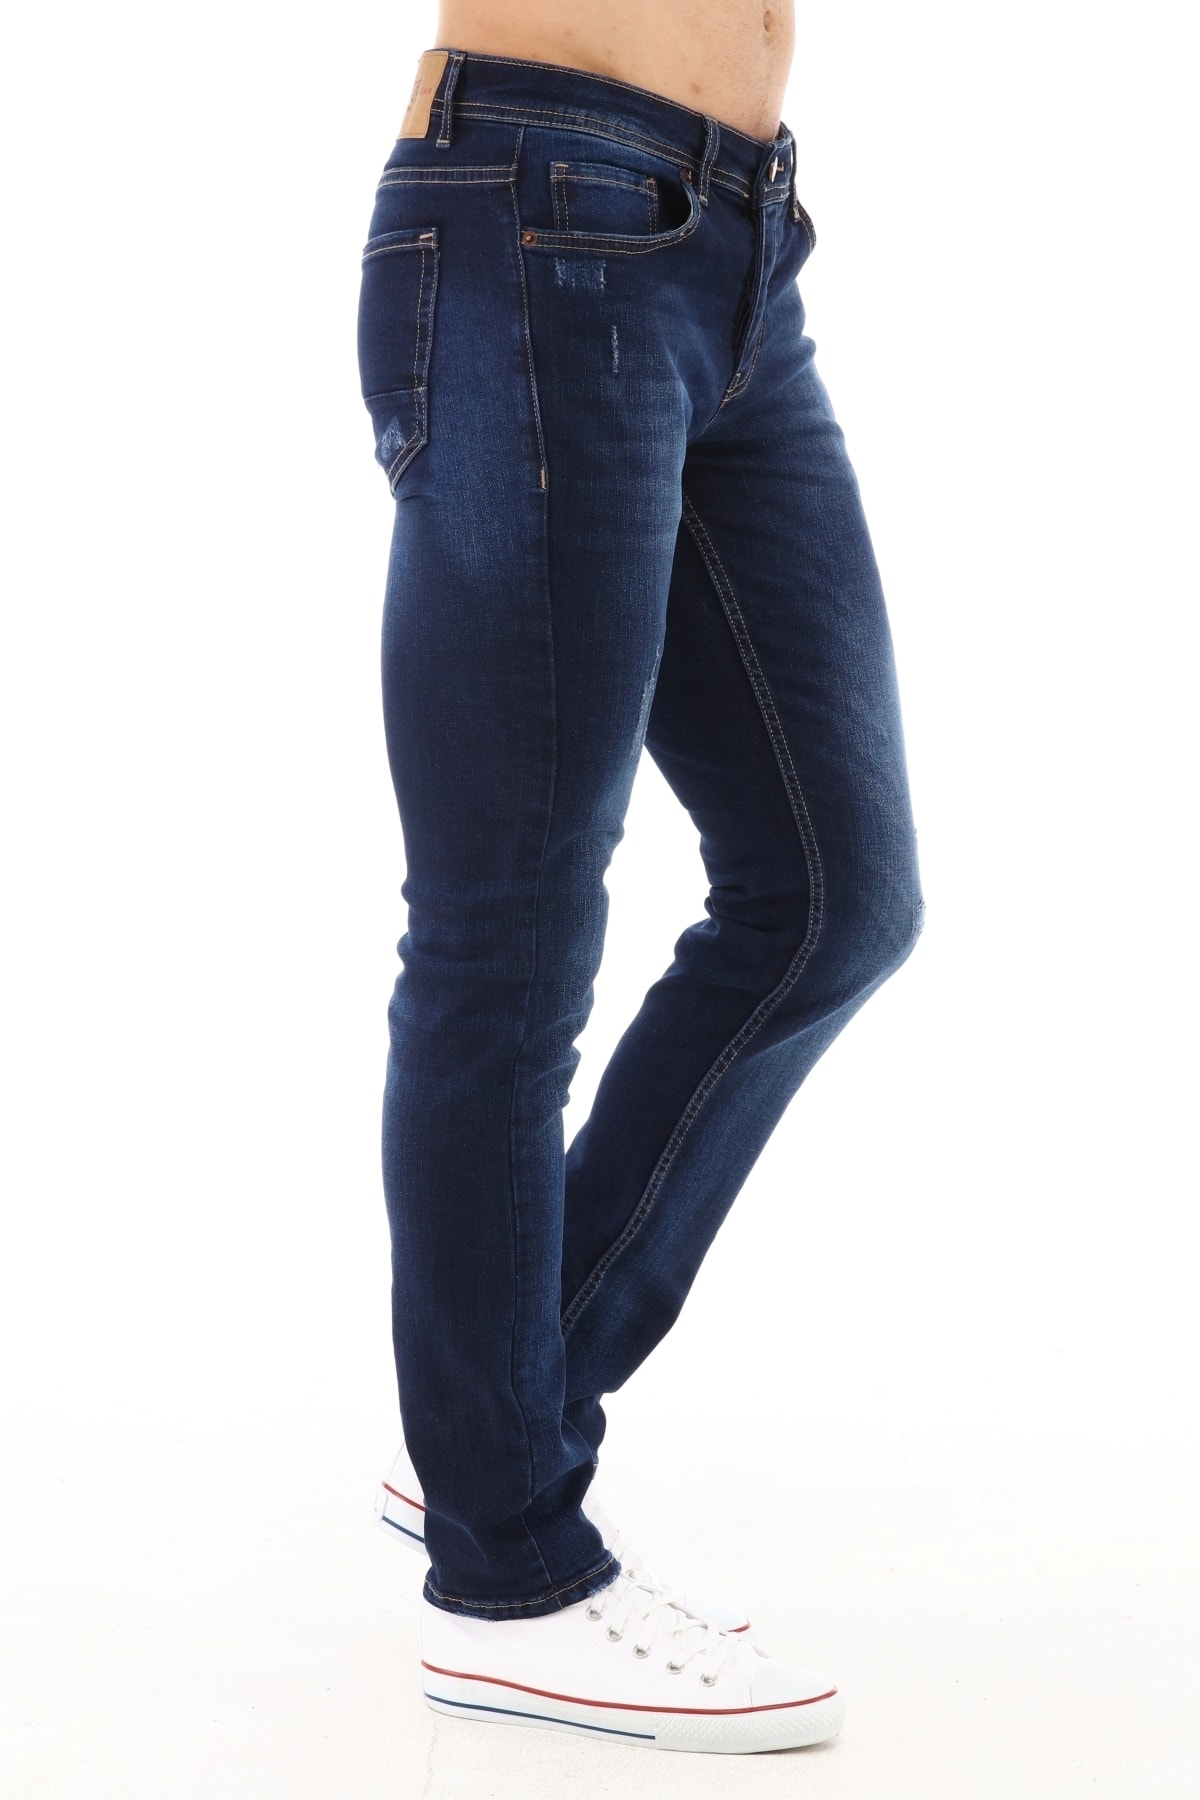 CEDY DENIM Erkek Koyu Lacivert Kot Pantolon Slim Fit Jean - C323